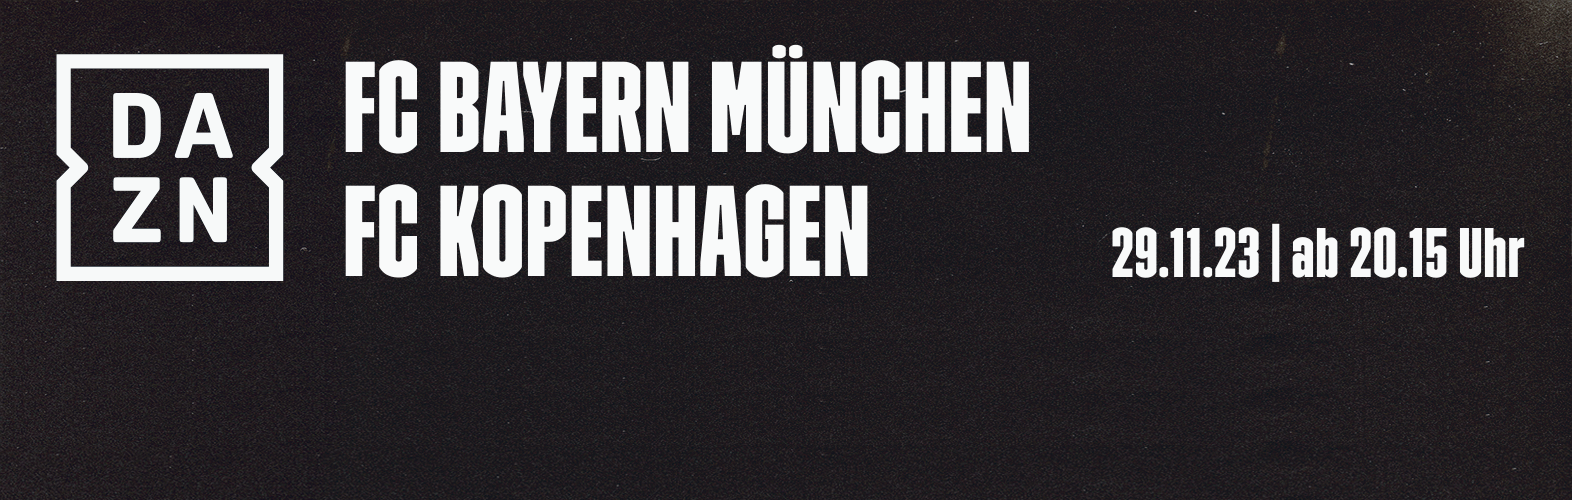 FC Bayern München FC Kopenhagen Champions League 2023 MD5 Banner